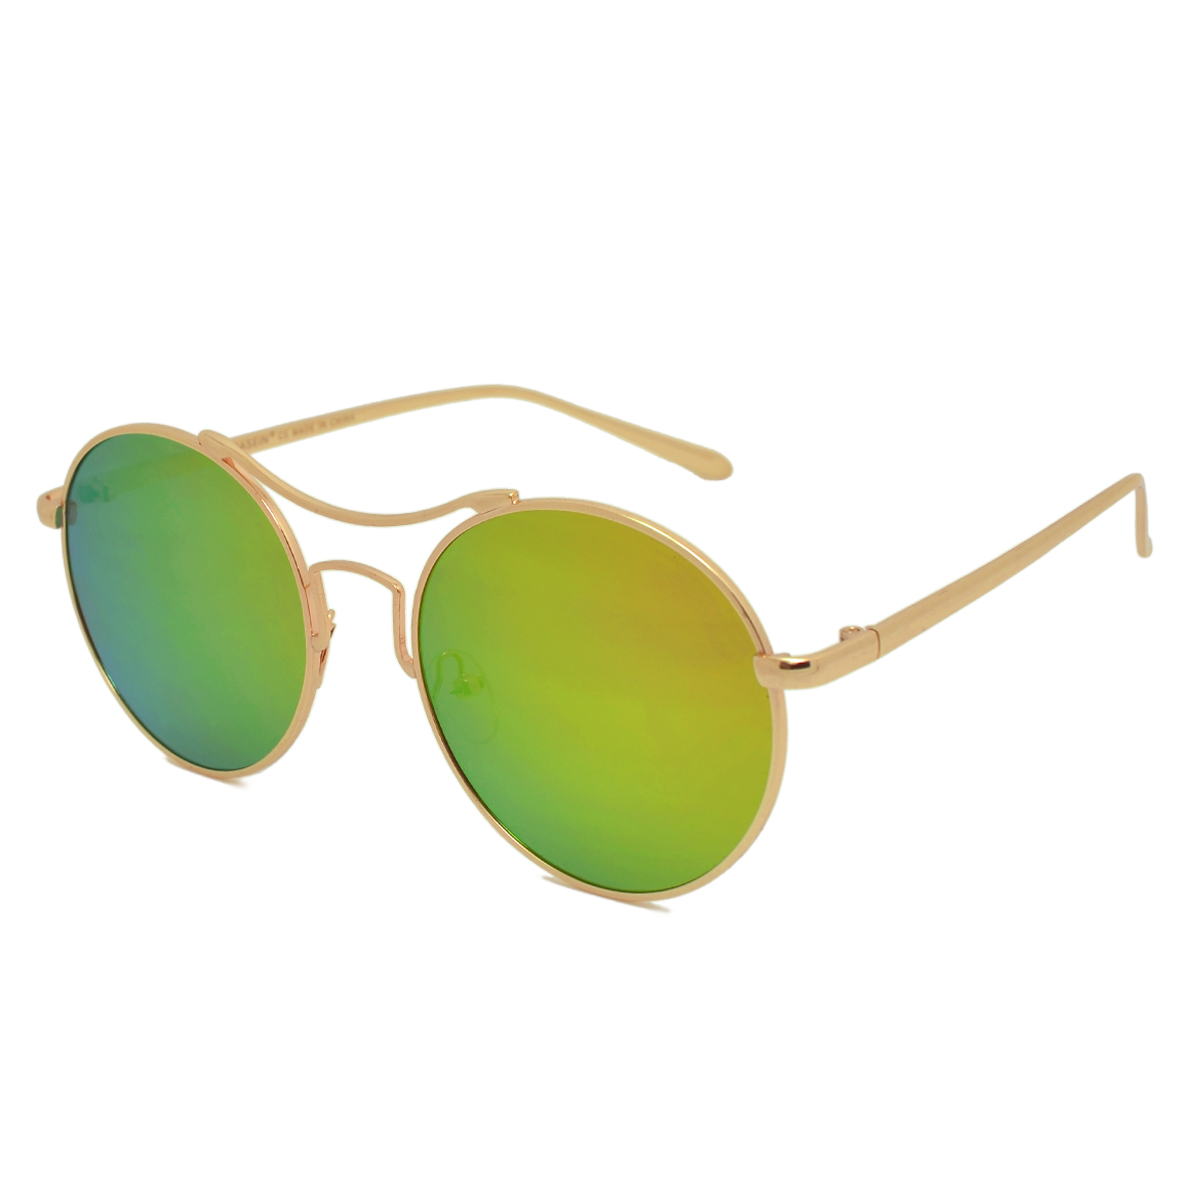 Dasein Retro Round UV400 Double Bridge Polarized Sunglasses - image 4 of 4